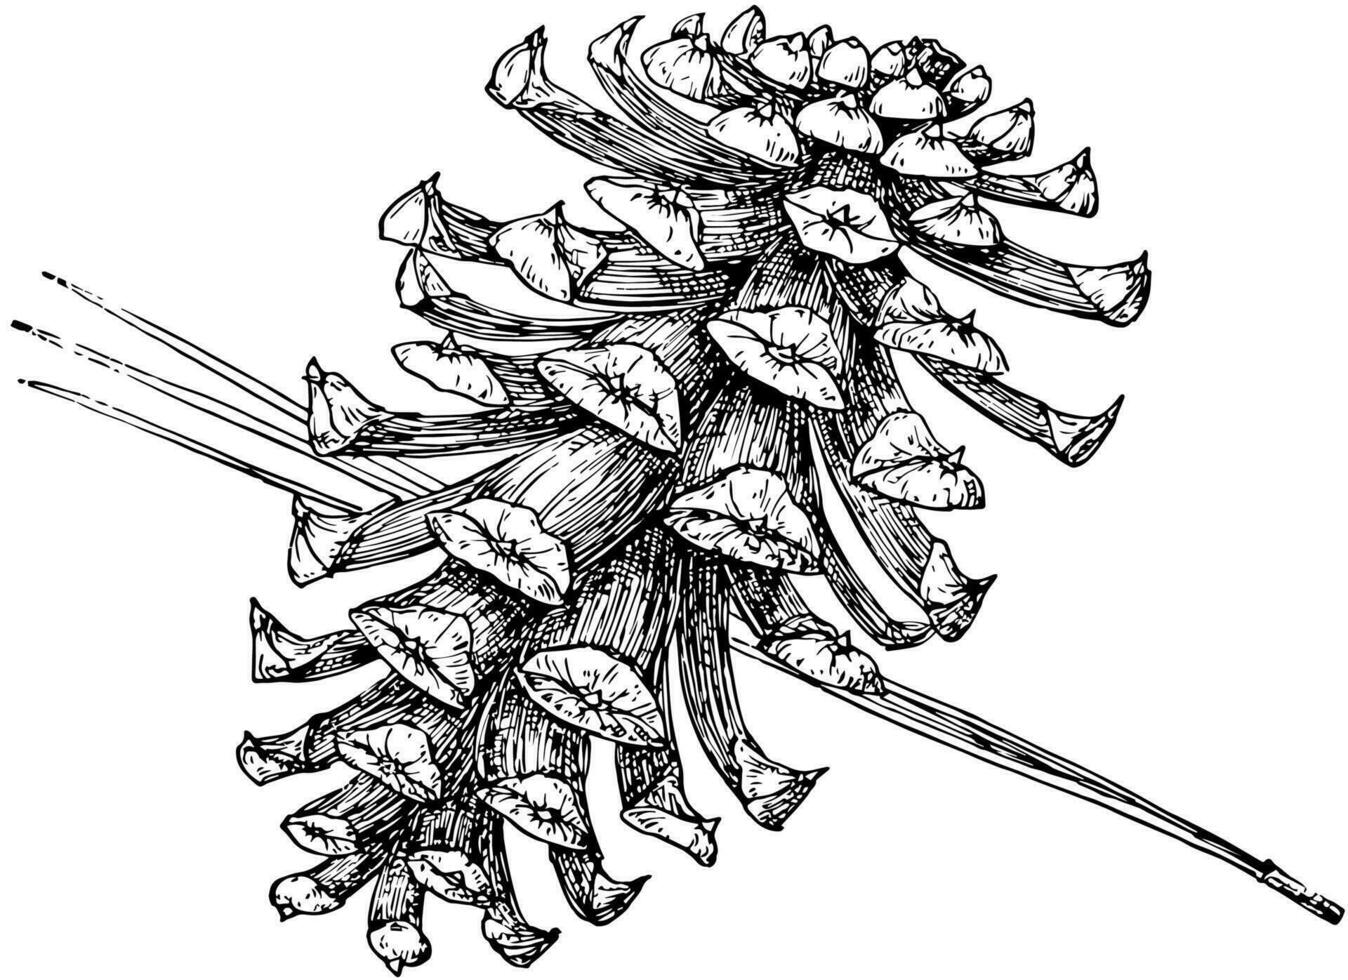 Pine Cone of Bull Pine vintage illustration. vector